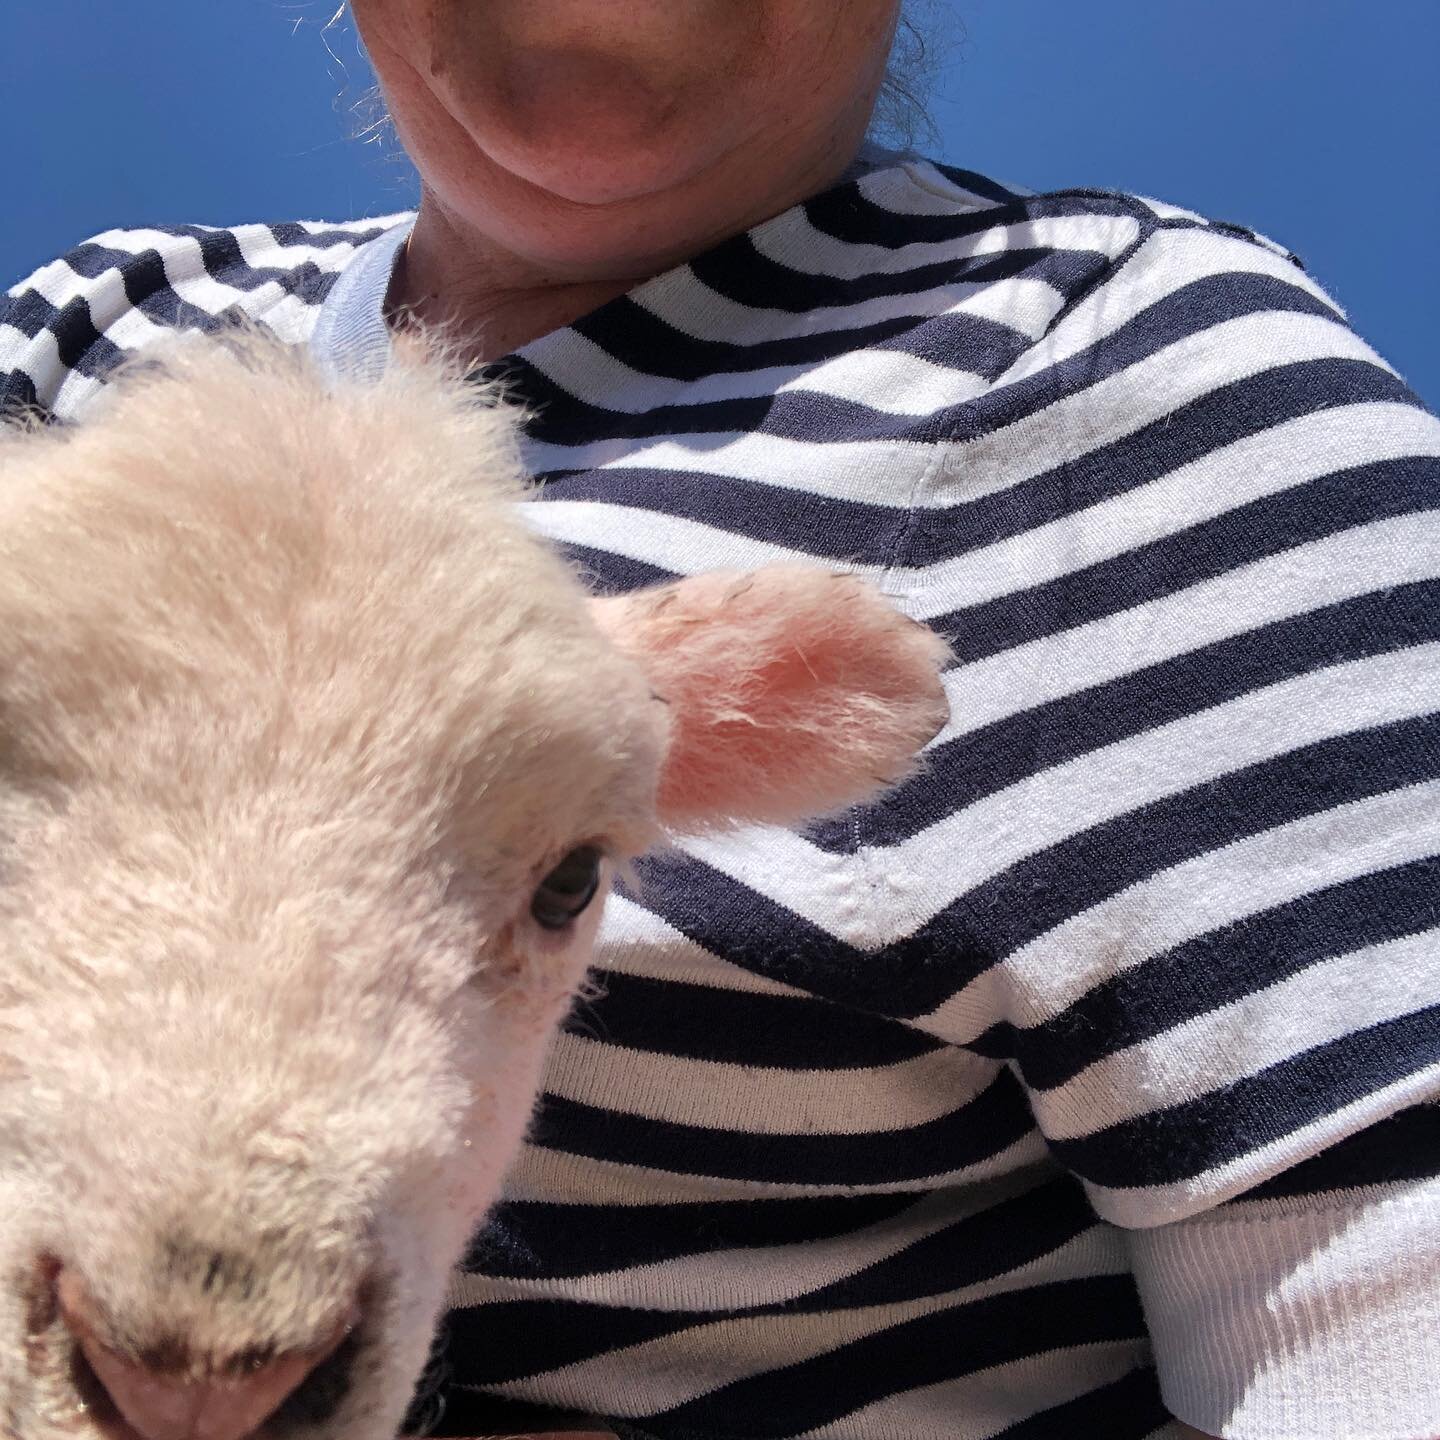 Feeding cheeky lambs in the spring sunshine ❤️